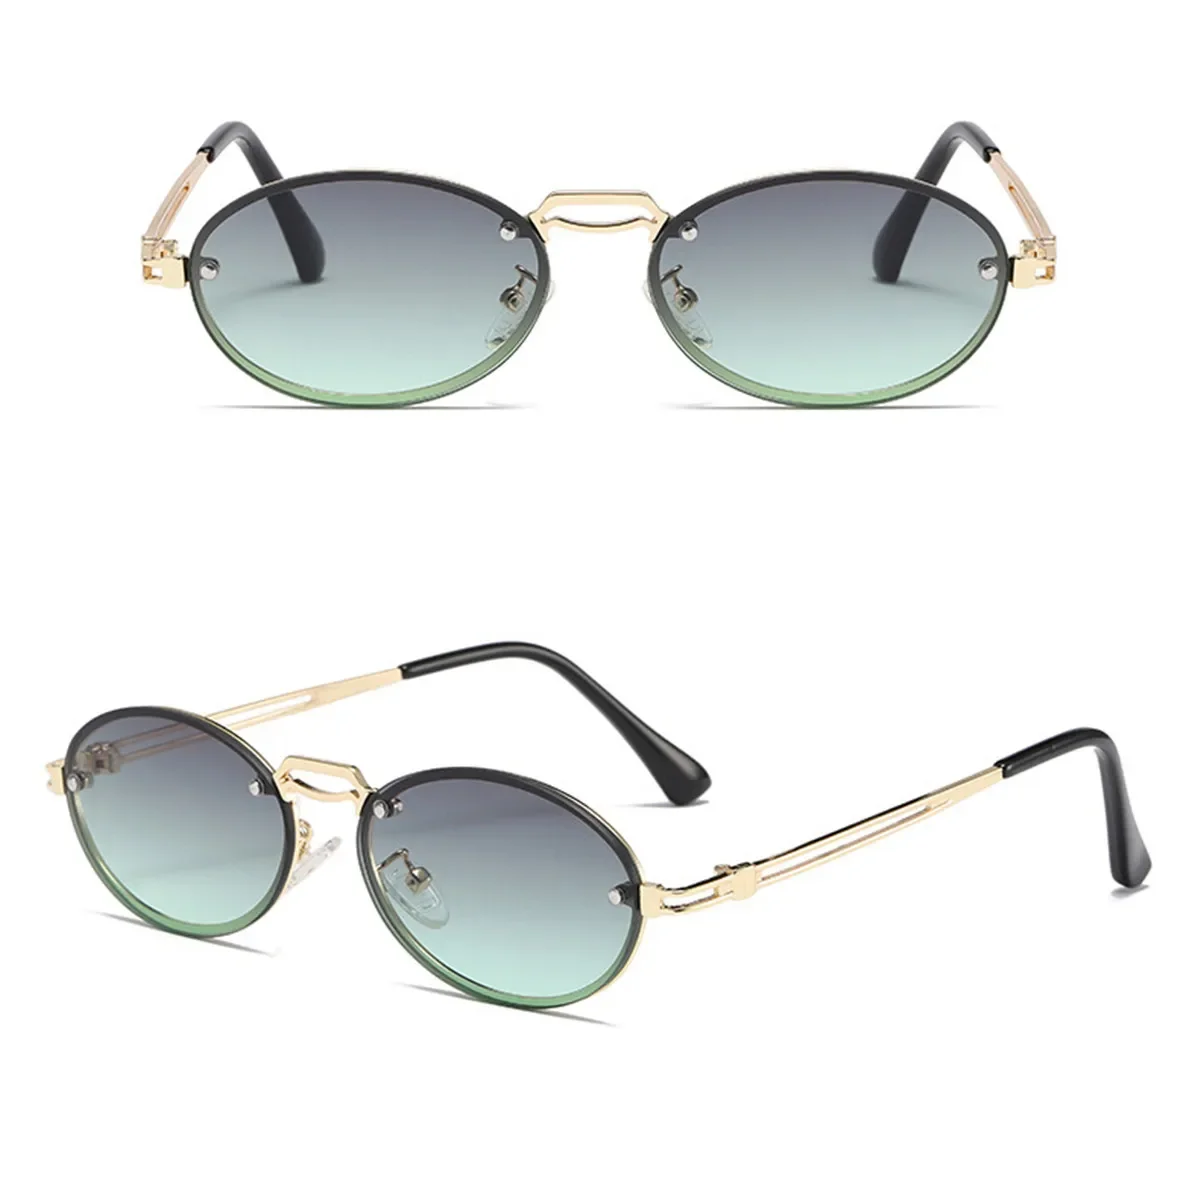 

FOENIXSONG Summer Fashion Sunglasses for Men Women Oval Small Sun Glasses UV400 Cute Eyewear Retro Sunglass